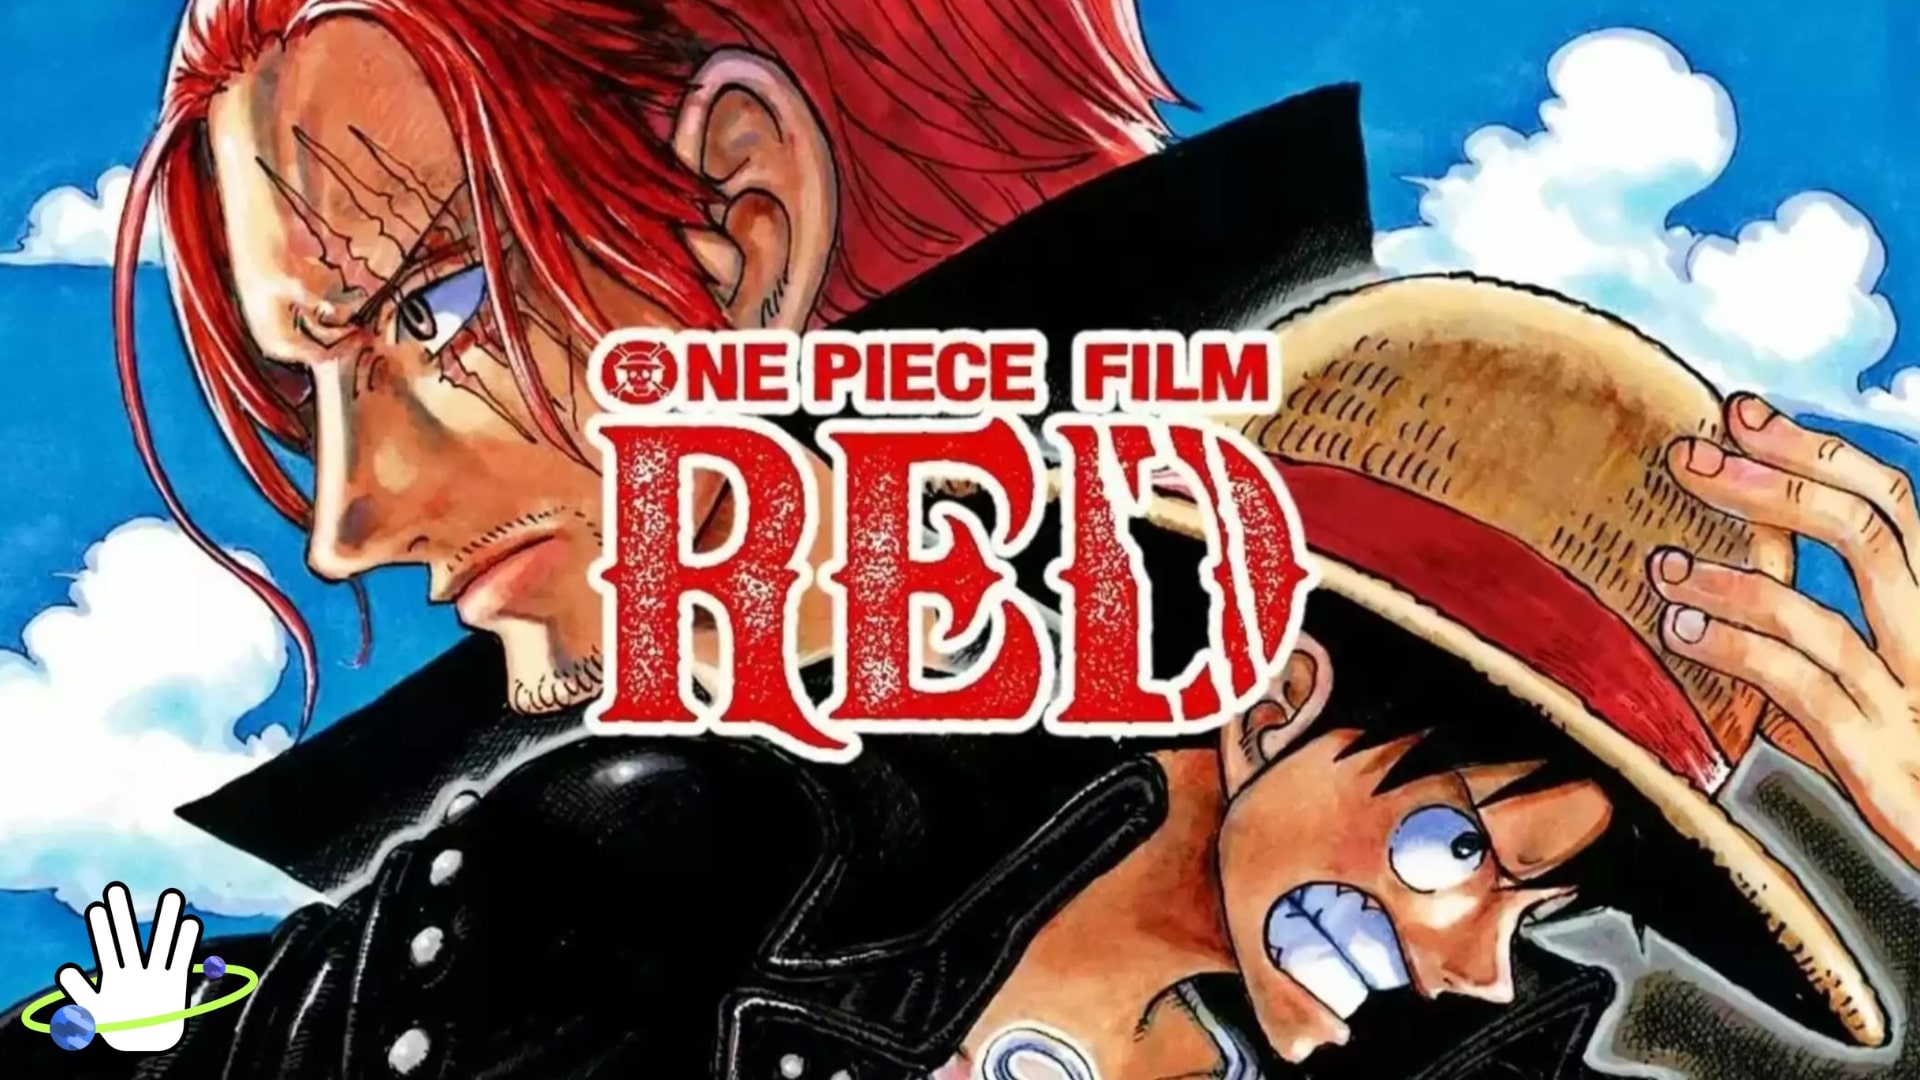 One Piece Red Anteprima